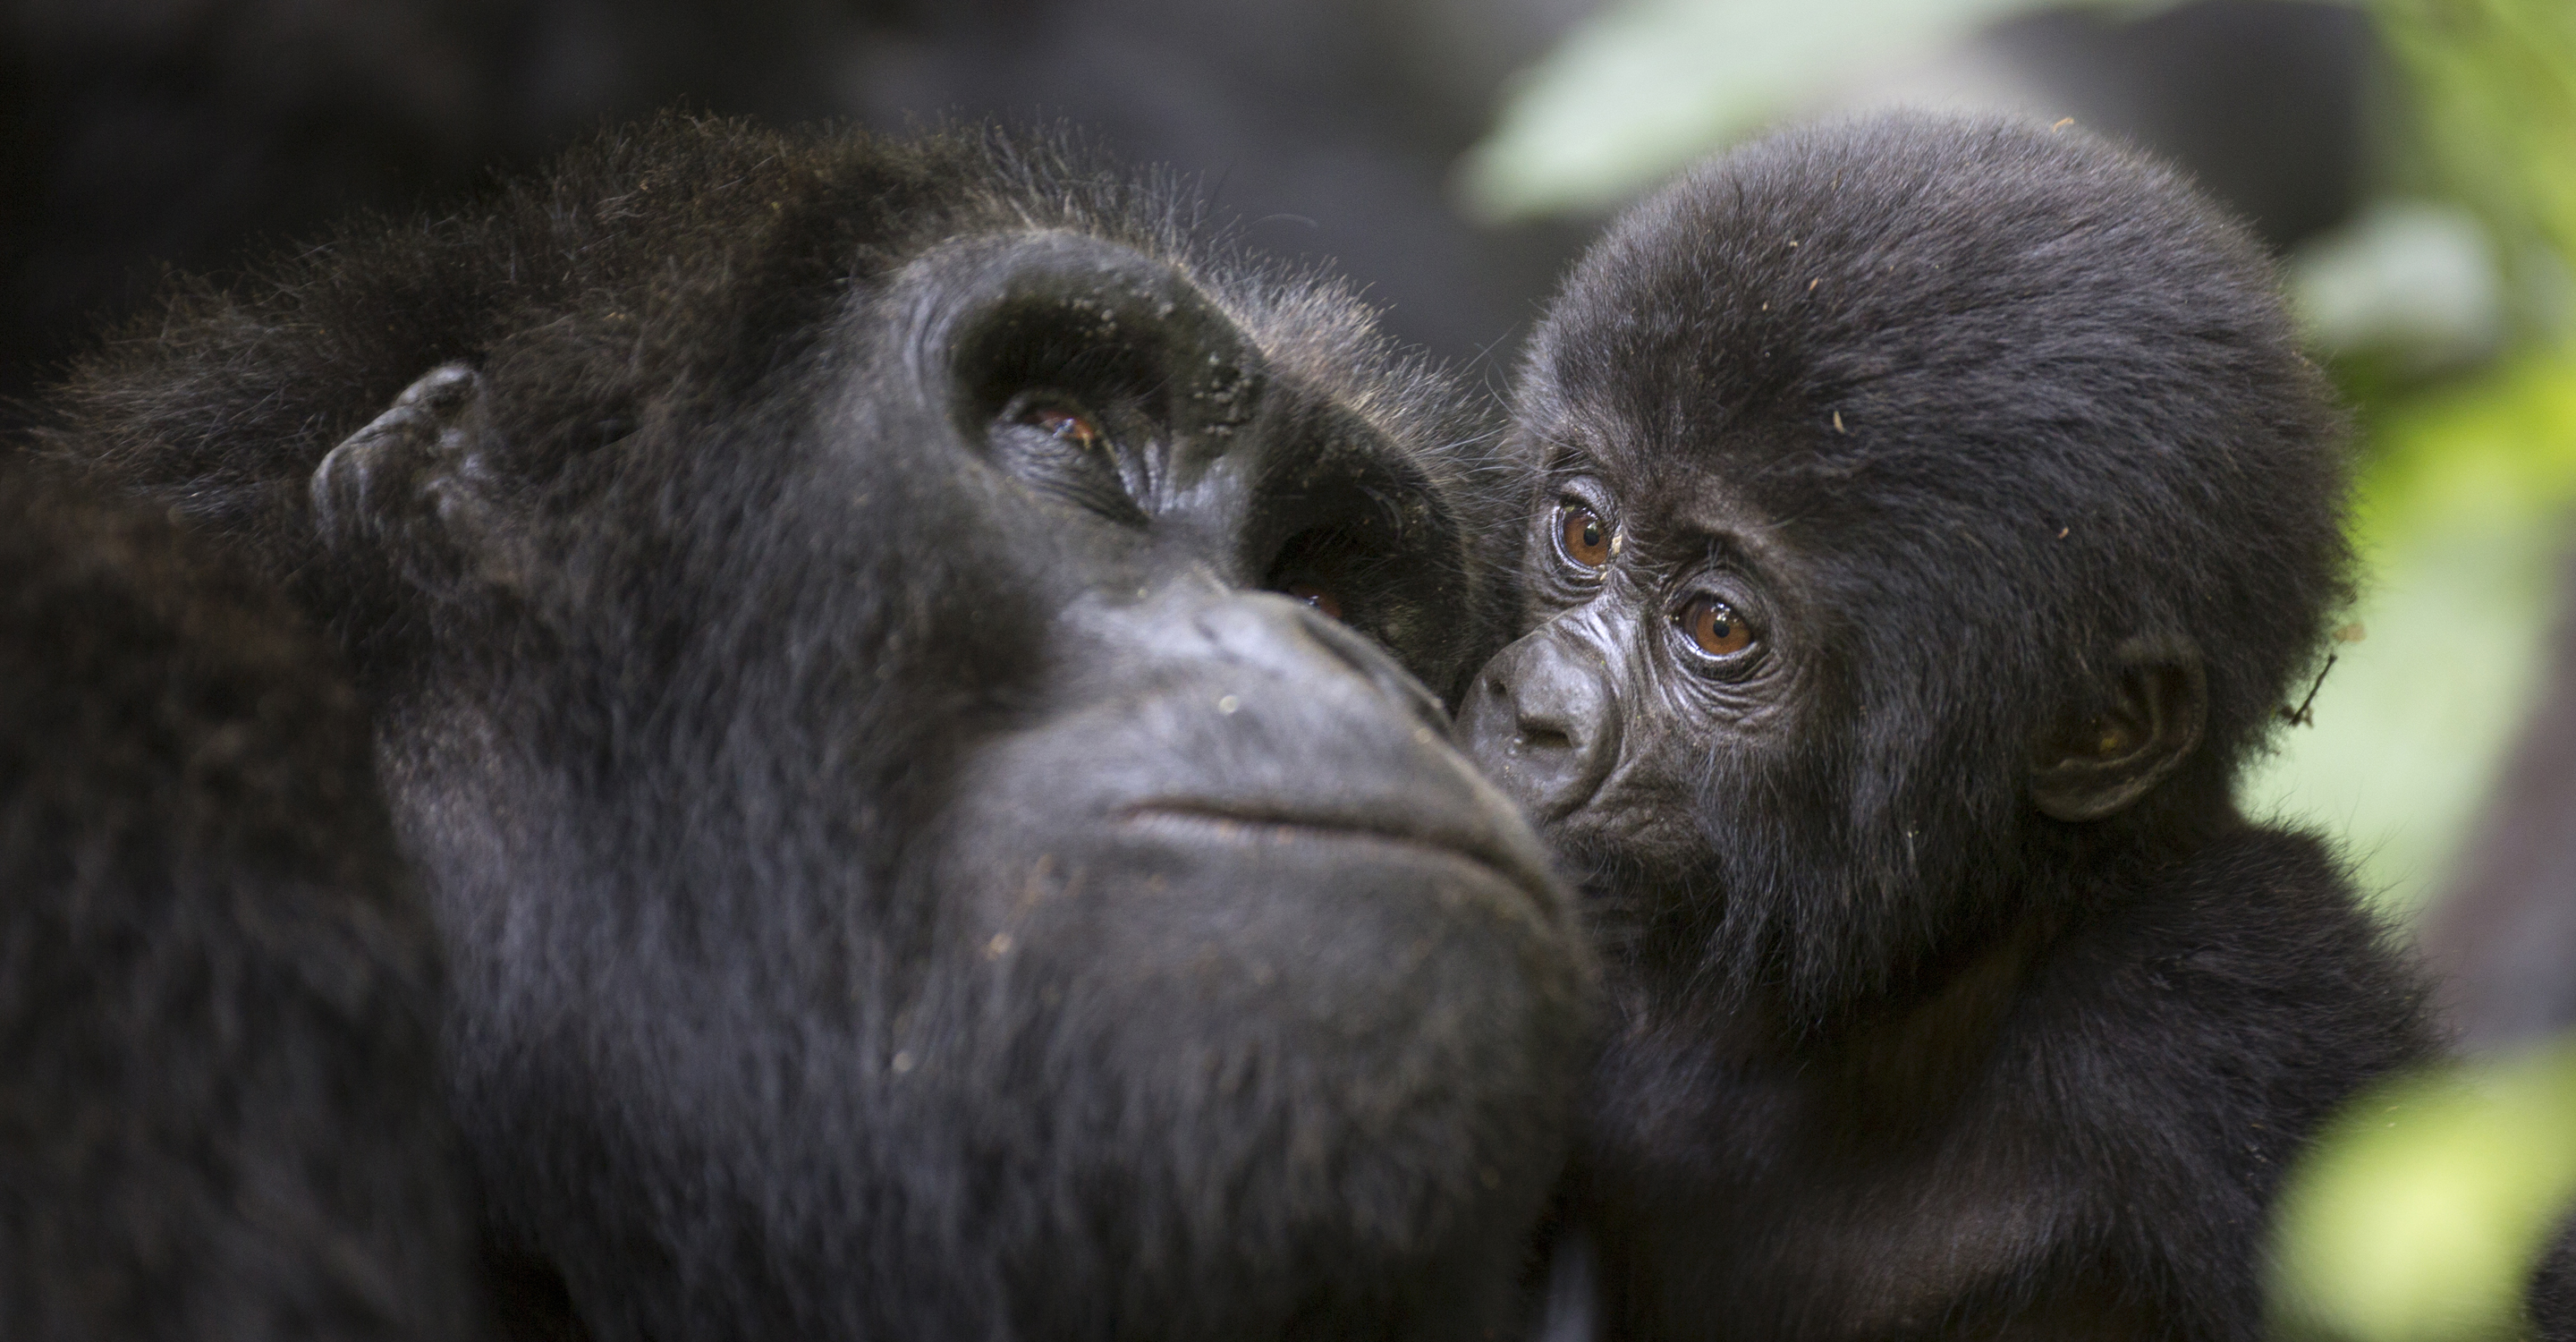 A baby mountain wild gorilla kisses his mother, Bwindi Impenetrable National Park, Uganda